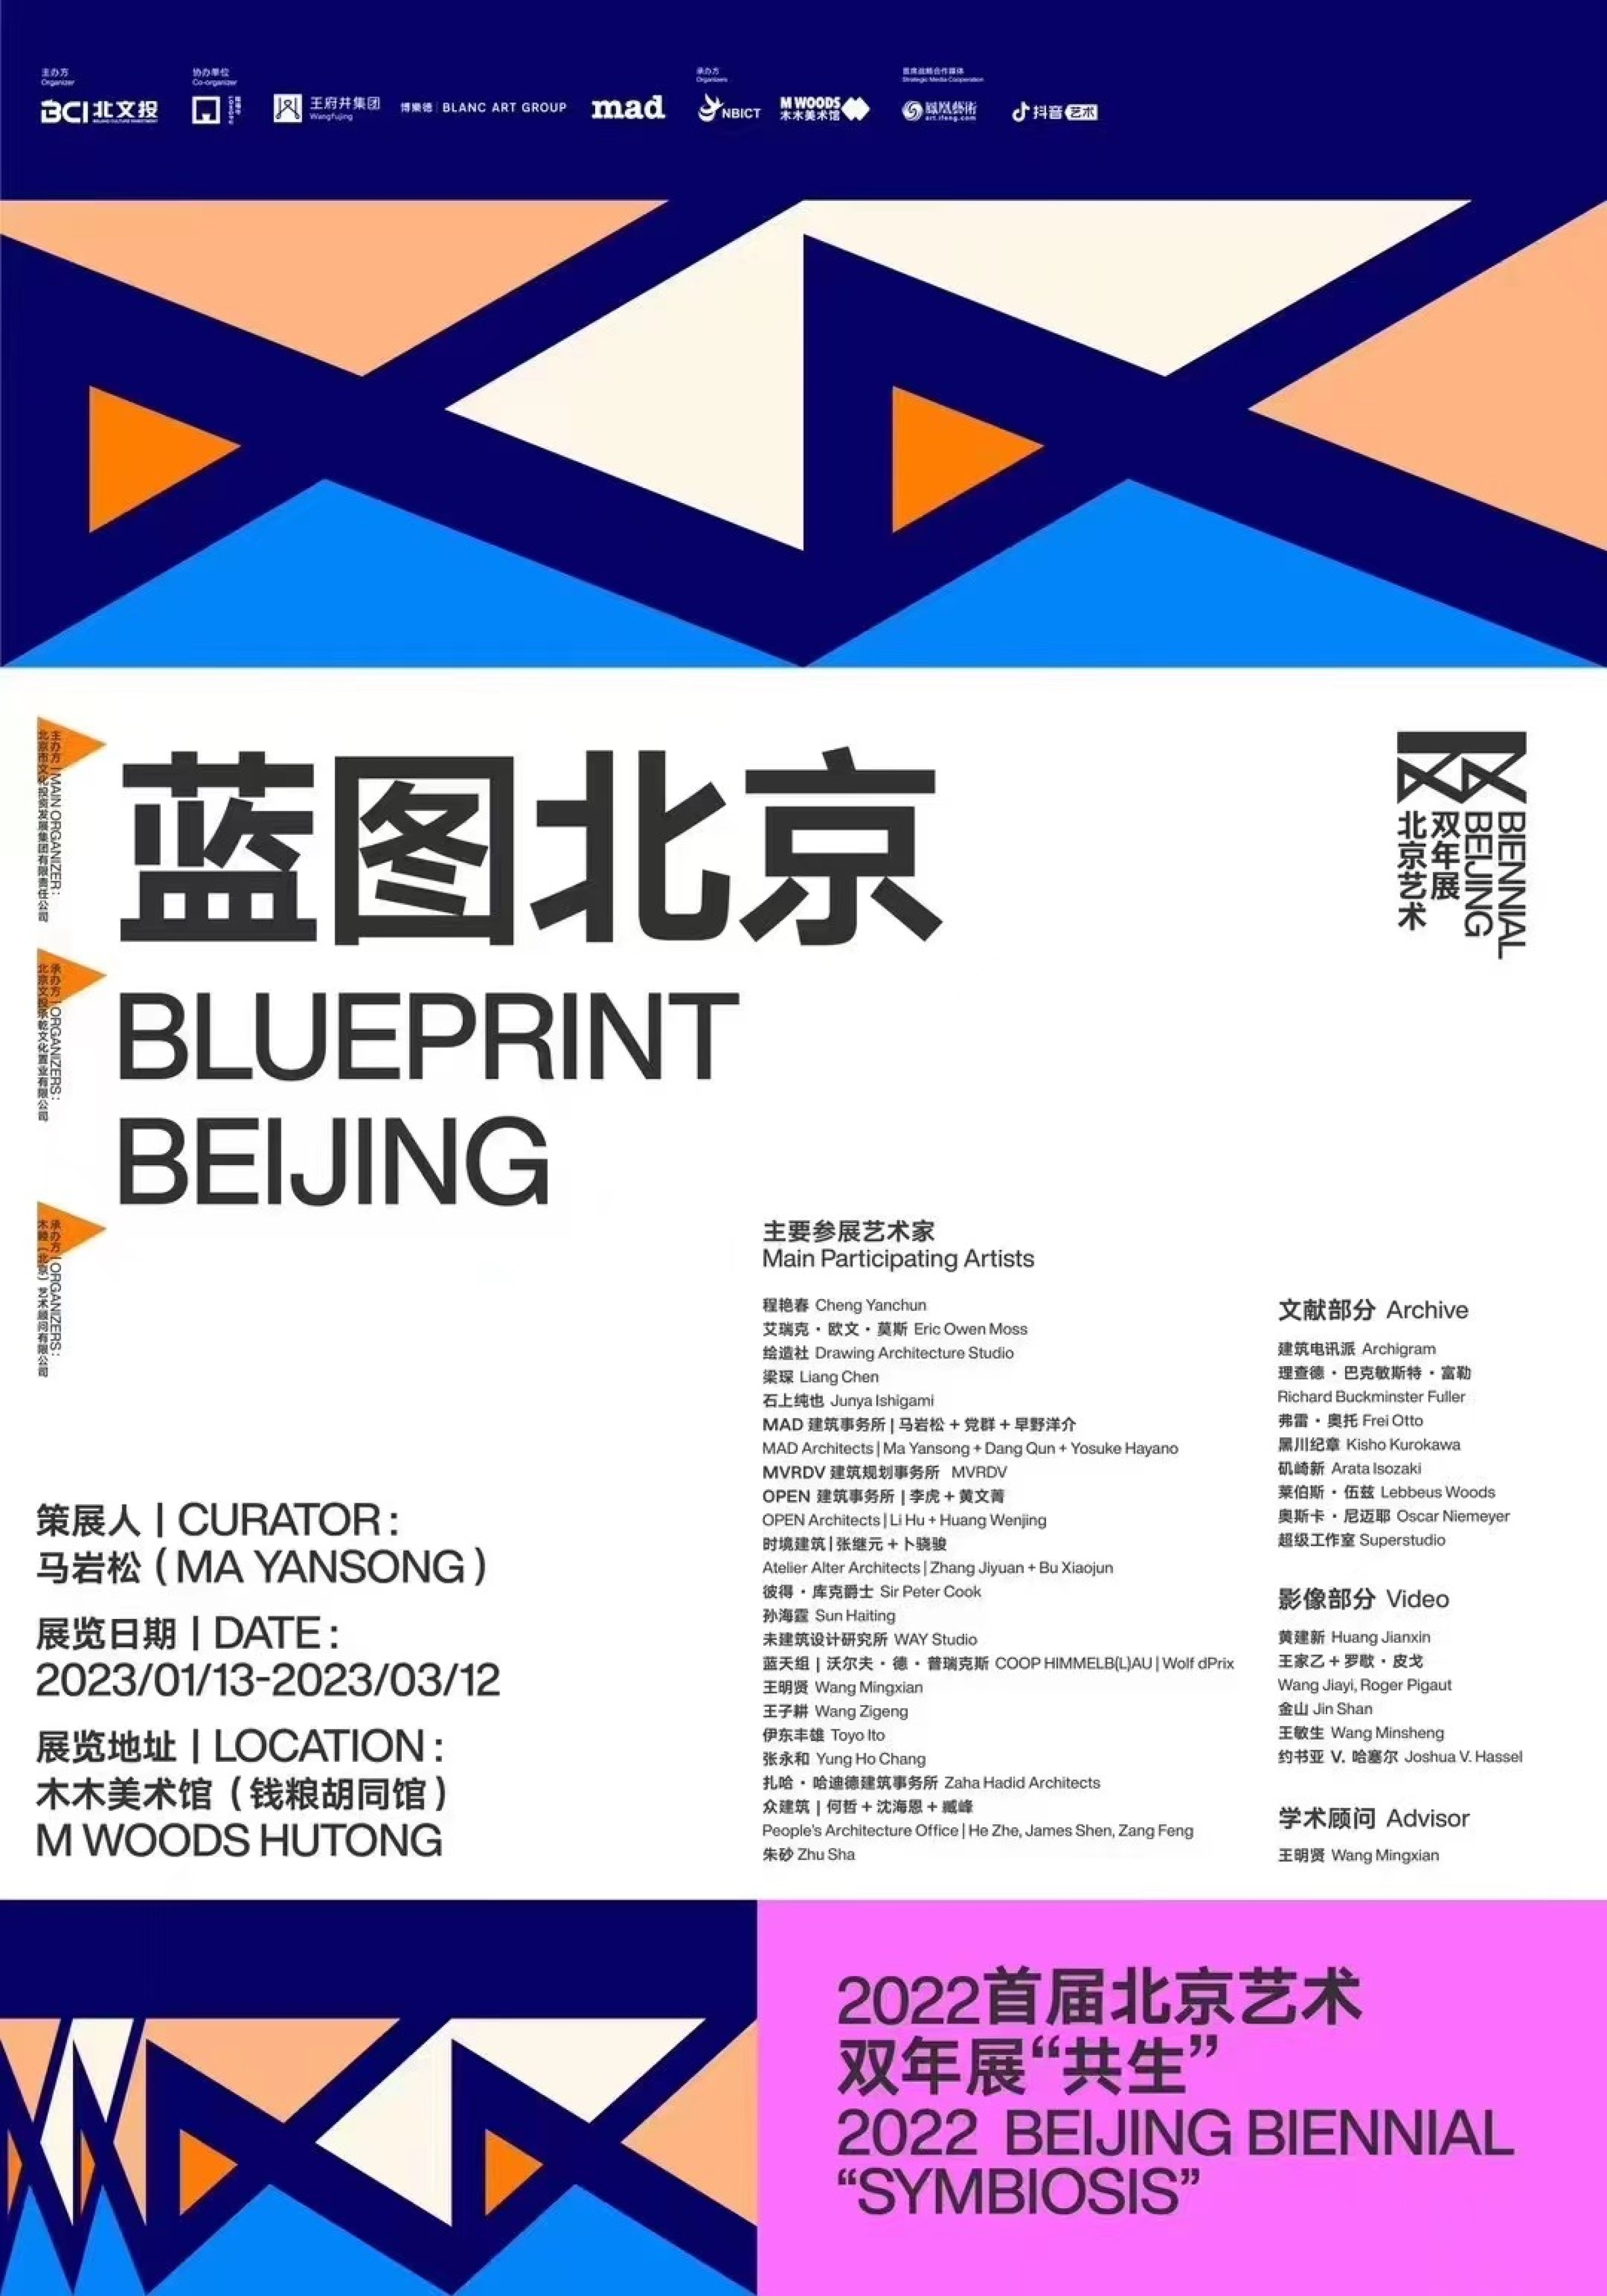 Zigeng Wang's Work “Imagined Beijing” Exhibited in the Architectural Section “Blueprint Beijing” of the First Beijing Art Biennale in 2022